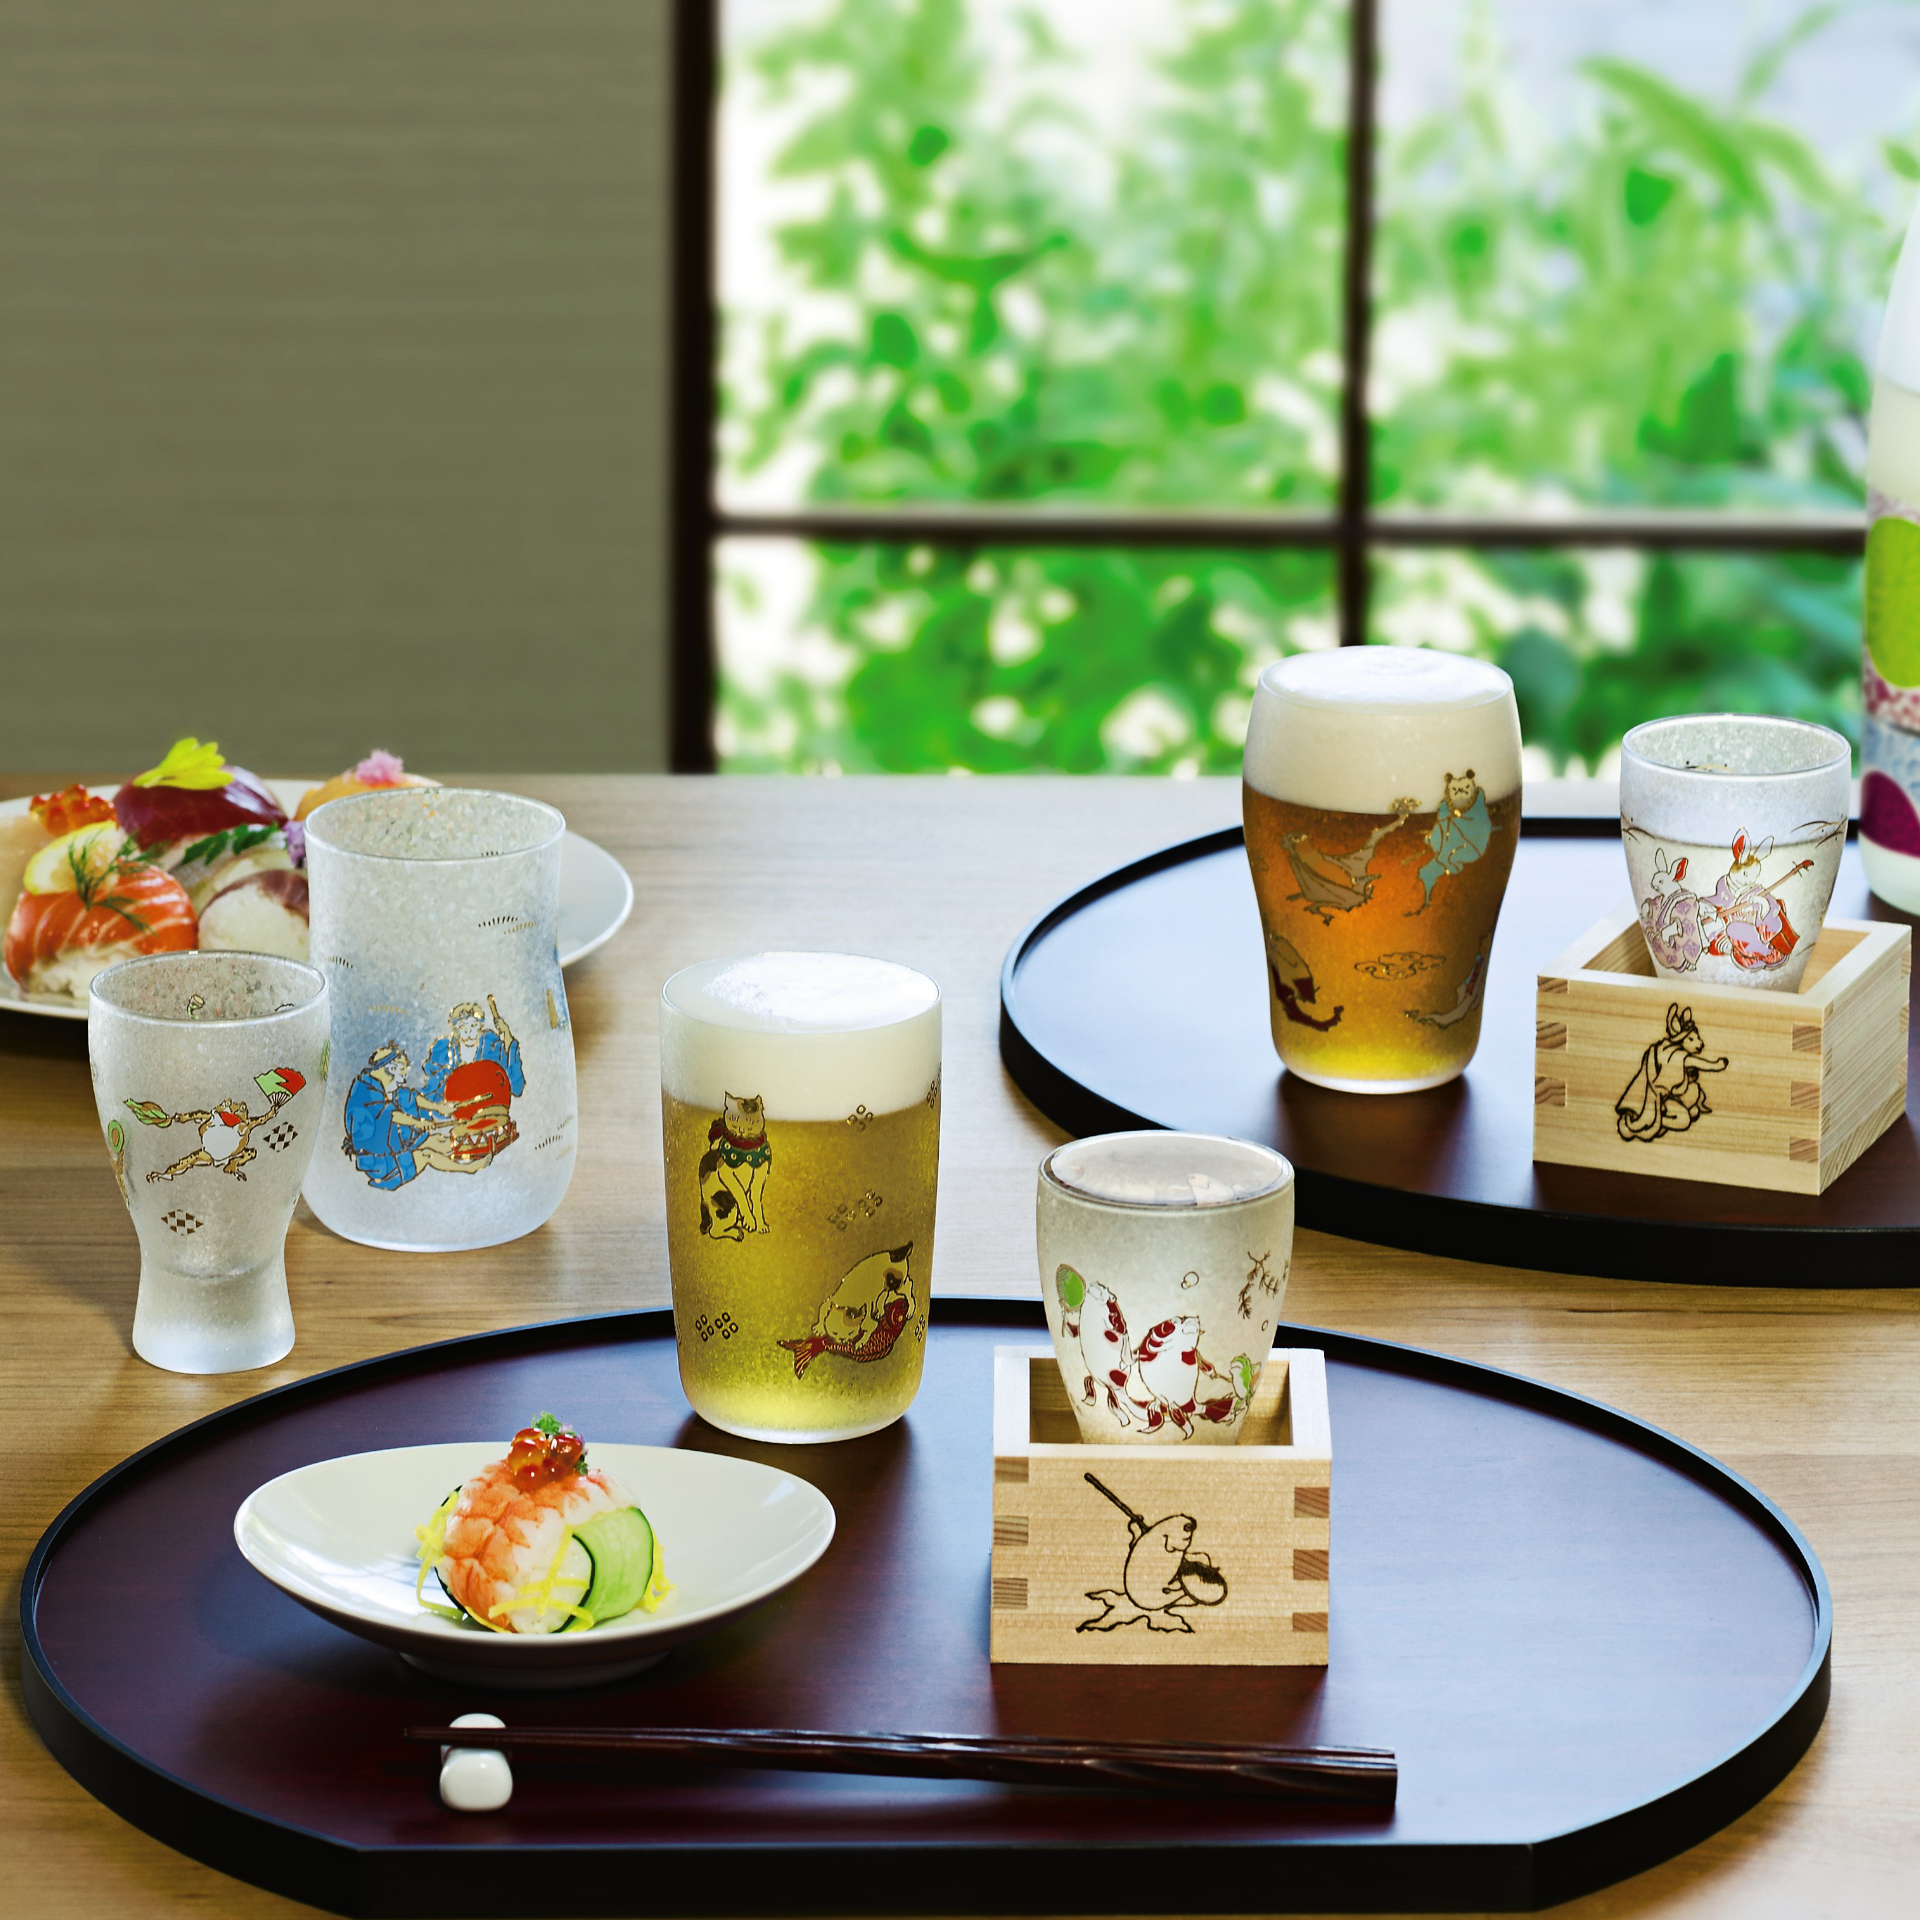 Lucky Animals Masuzake / Sake Cup with Wooden Masu - Frog / カエル